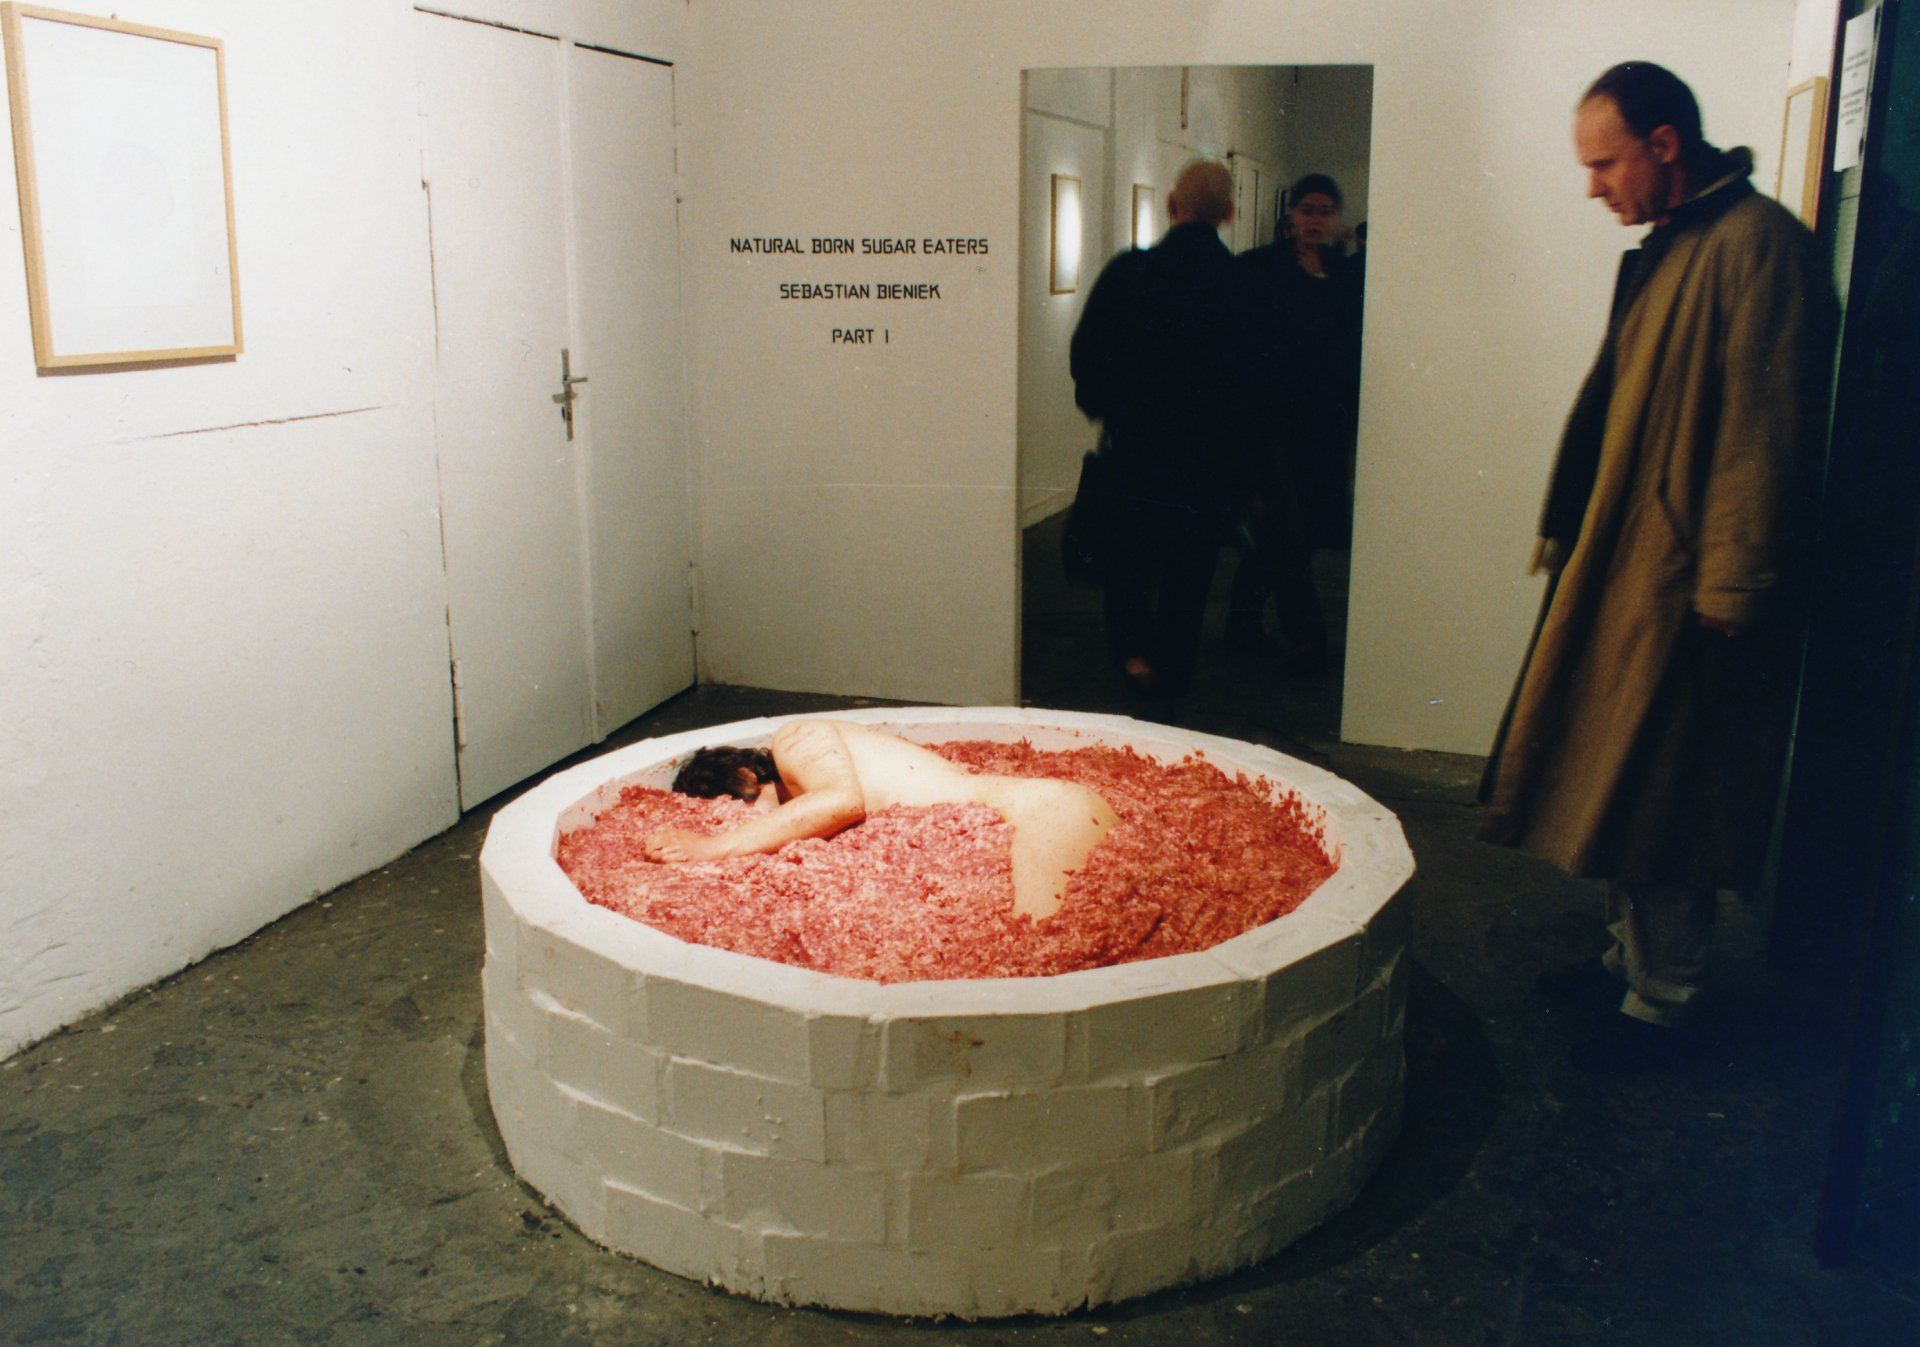 Sebastian Bieniek Performance, 1999, lying in half a ton of minced meat for three days. Kunthaus Tacheles, Berlin.